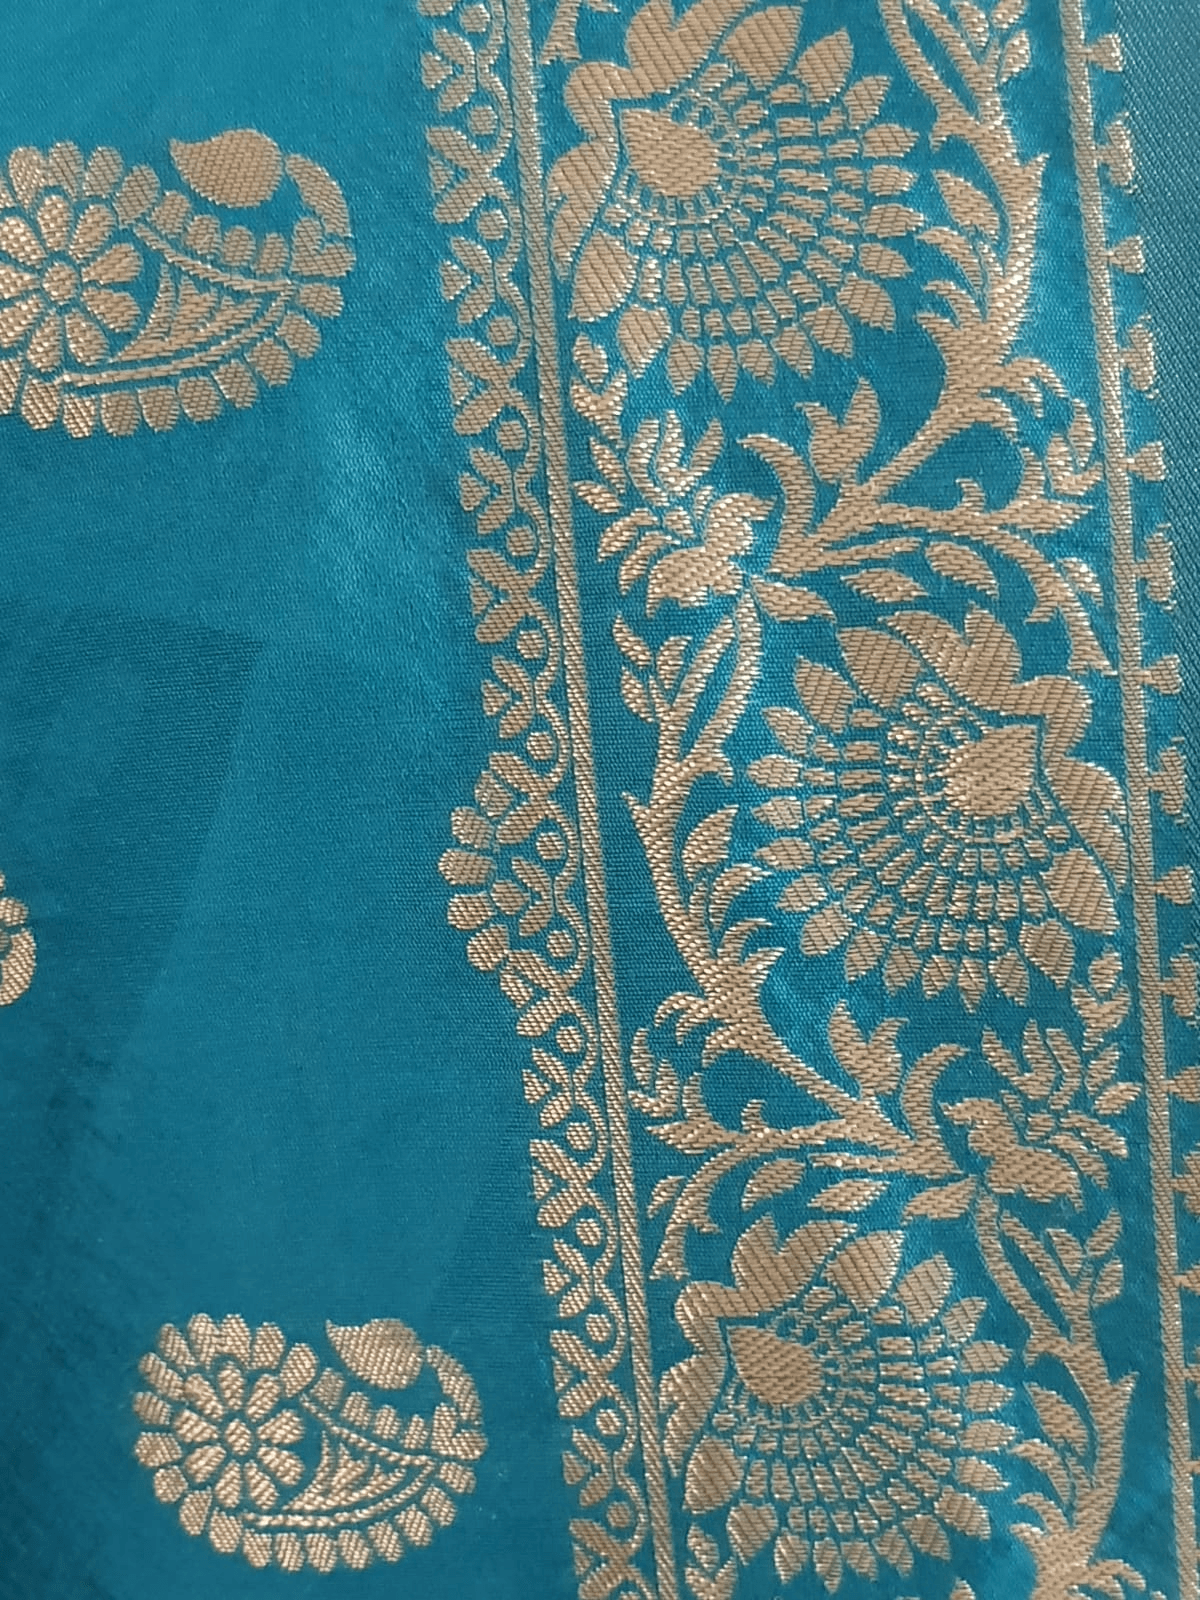 Dupion Art Silk Turquoise Zari Weaven Banarasi Dupatta DP68 - Ethnic's By Anvi Creations